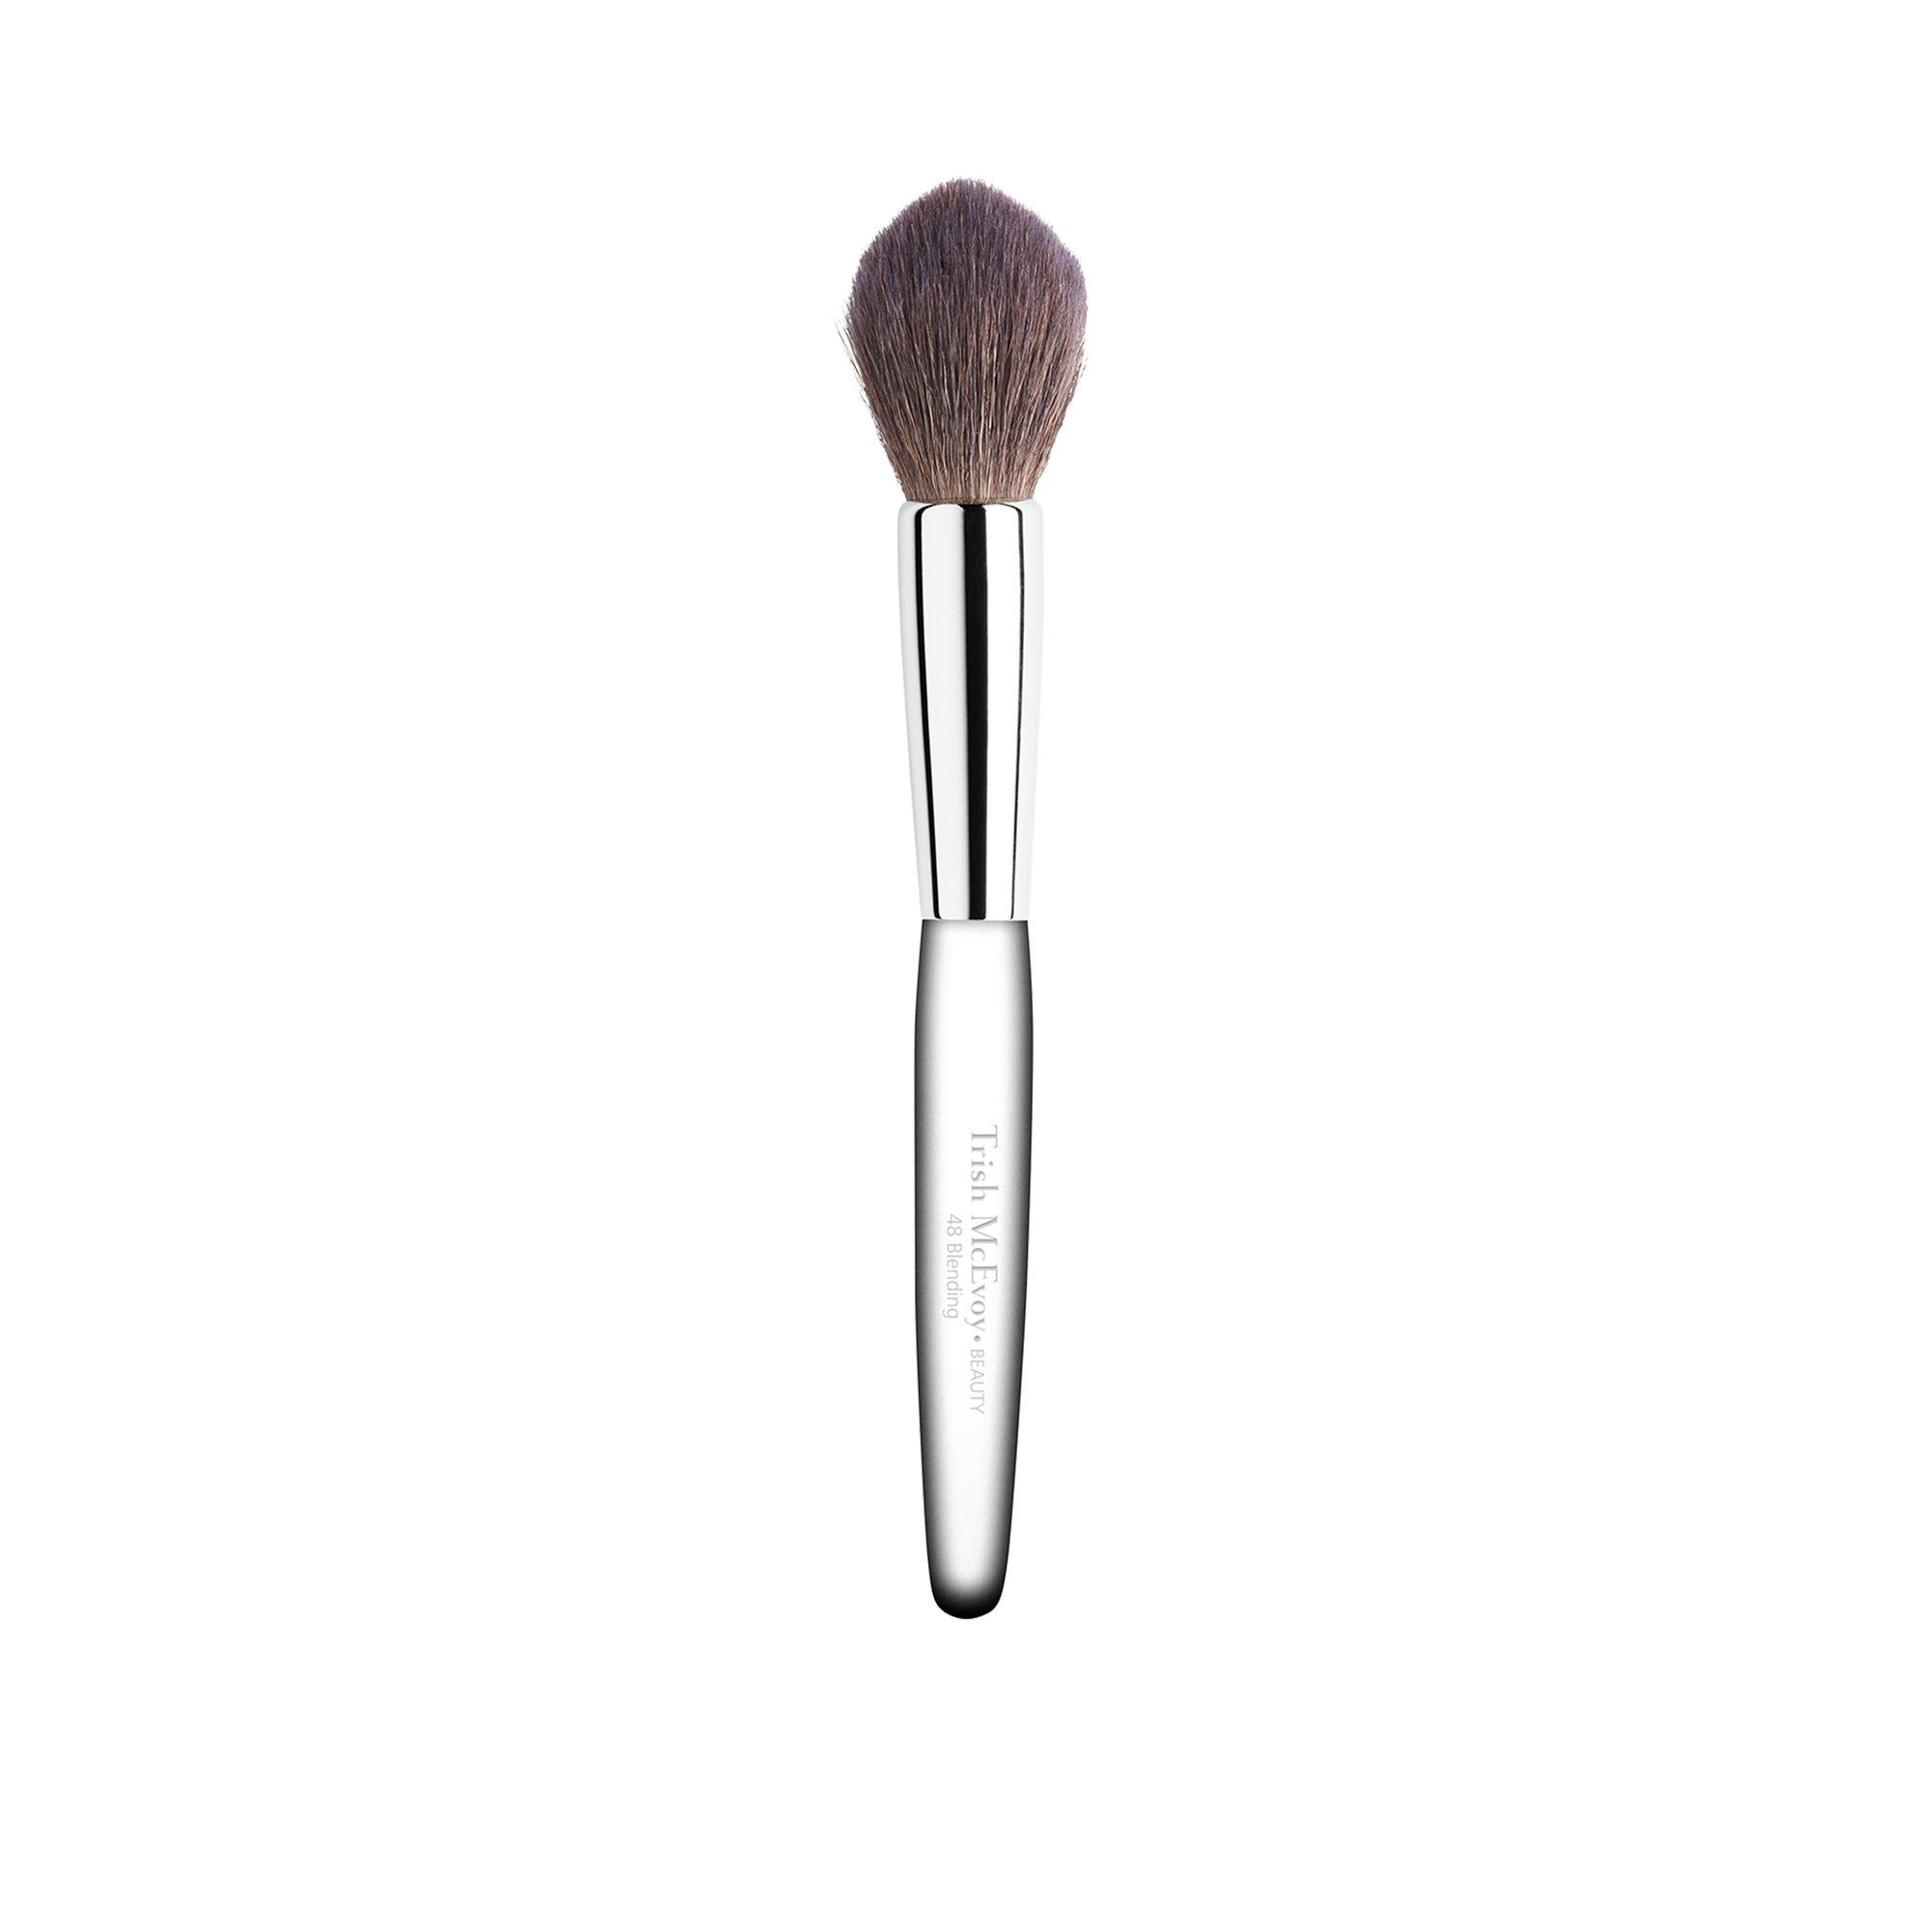 Introducing: Mini Detail Blending Brushes 